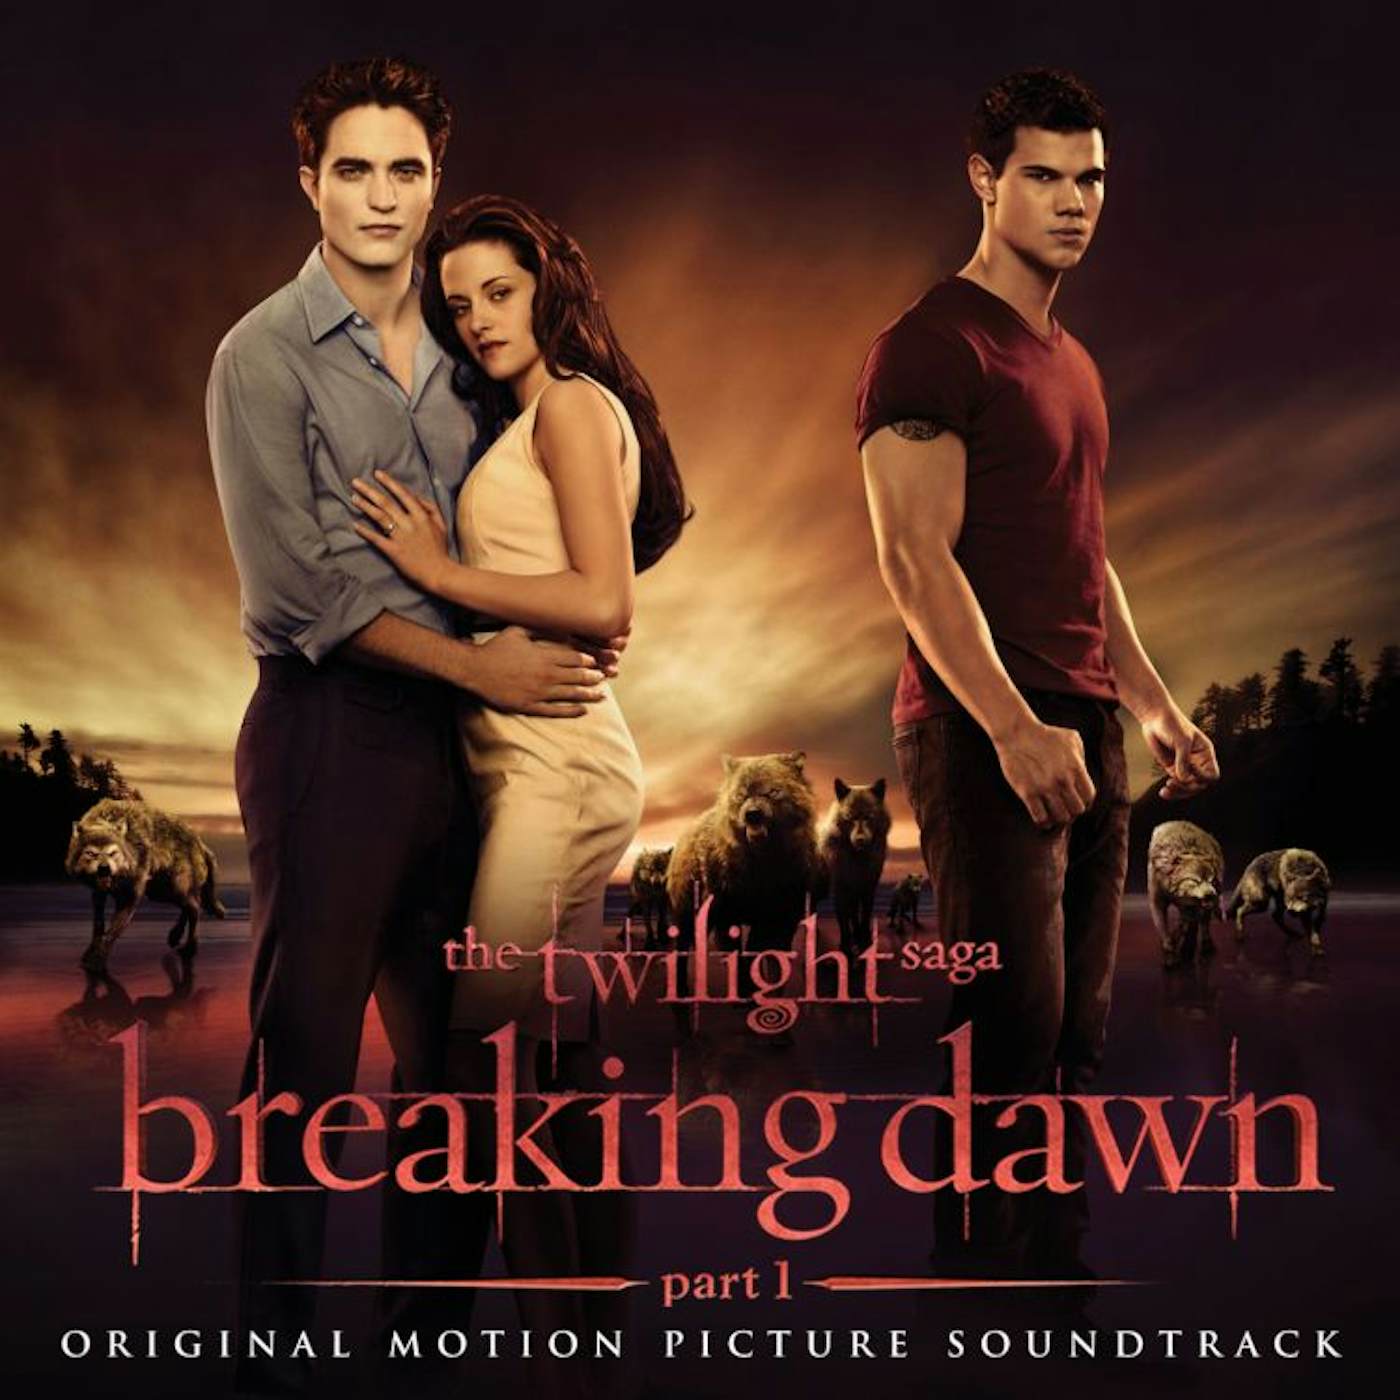 Twilight Breaking Dawn Part 1 - Original Motion Picture Soundtrack CD